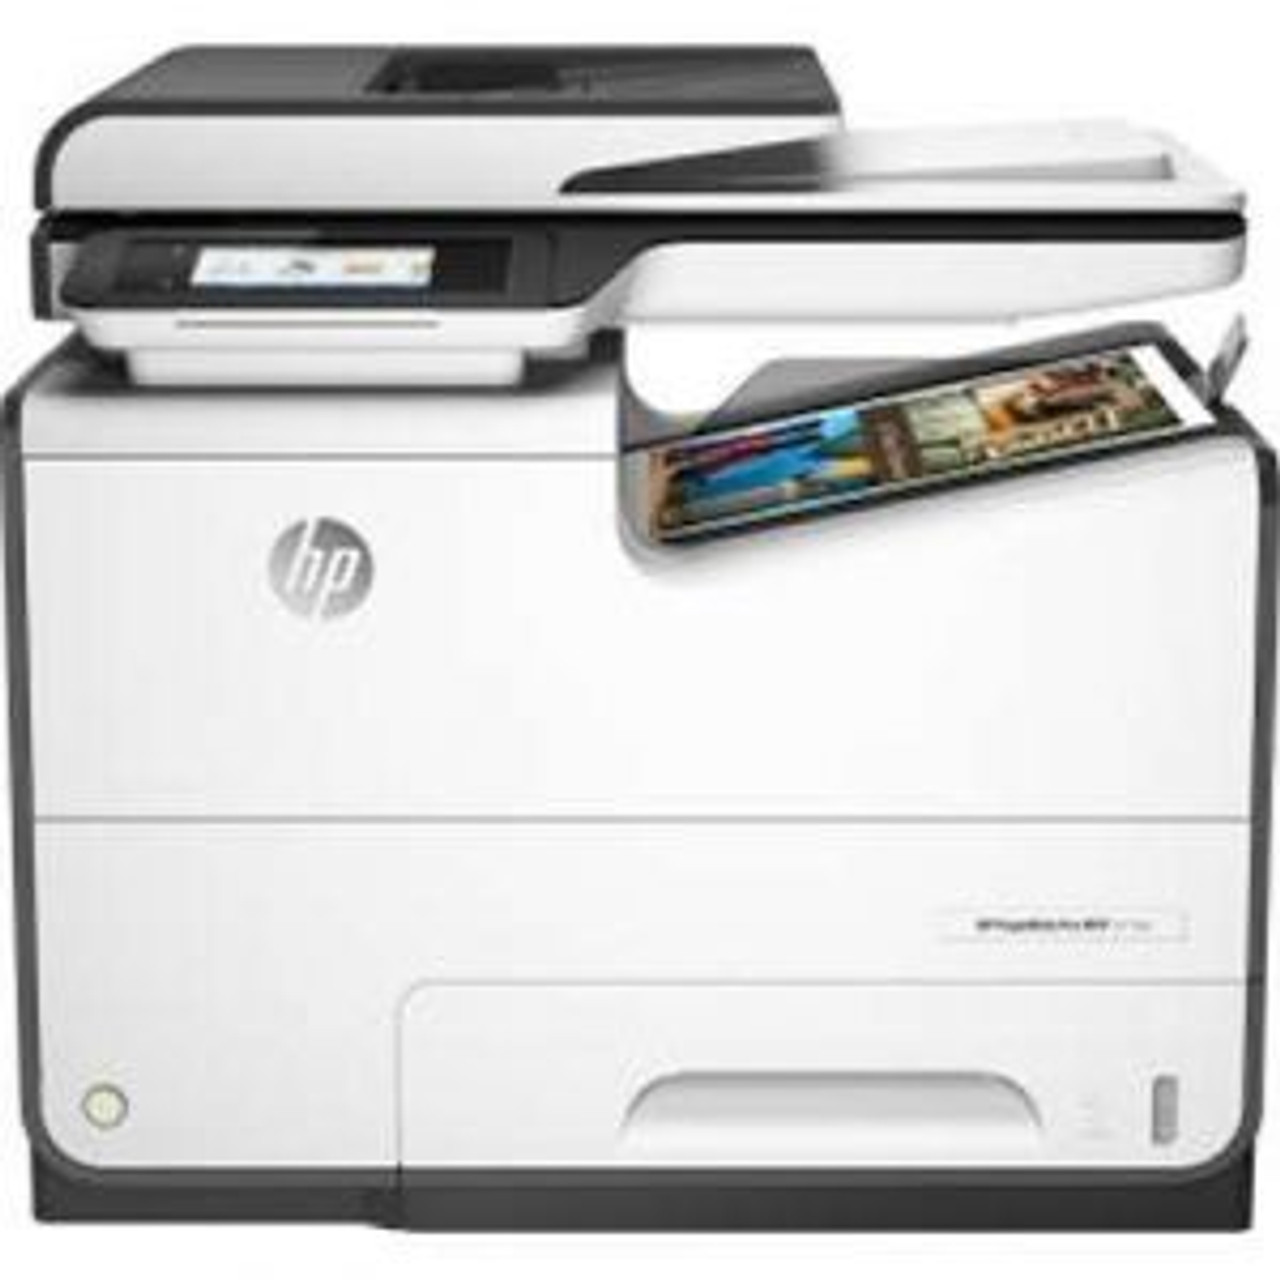 Printers & Cartridges,Printer,Inkjet printers,HP,D3Q21A#B1H